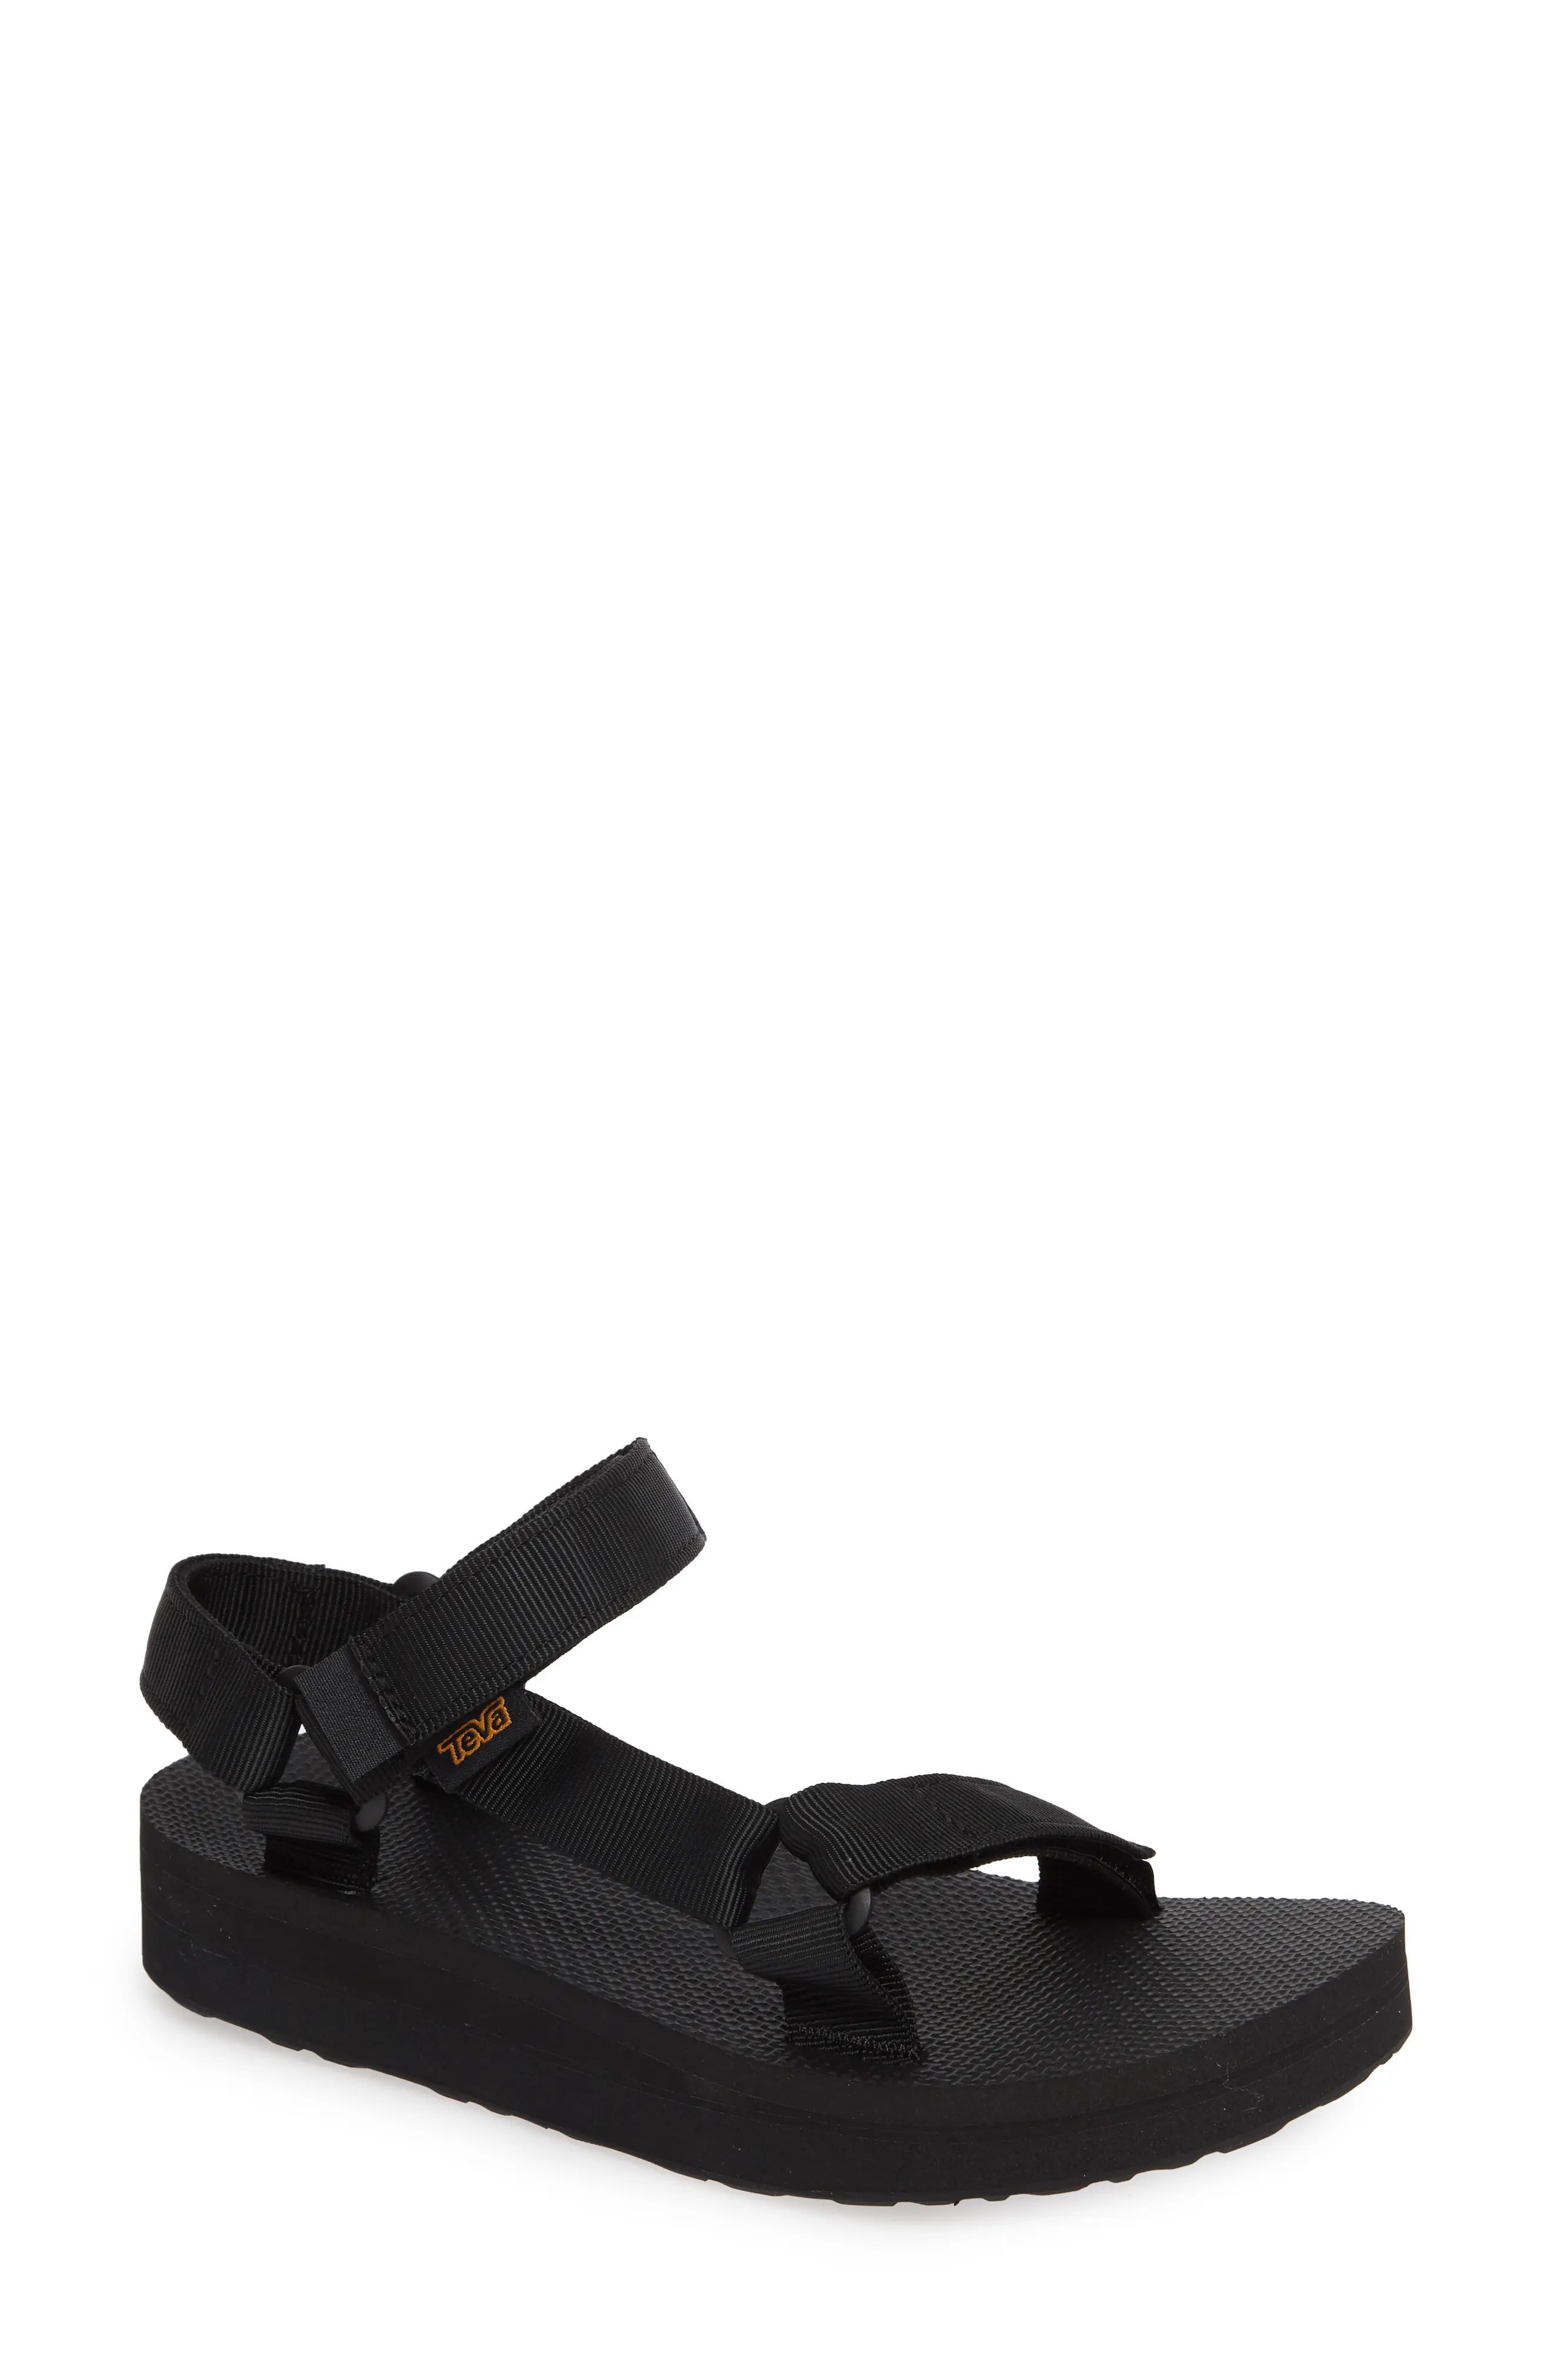 Teva Midform Universal Sandal in Black Fabric at Nordstrom, Size 6 | Nordstrom